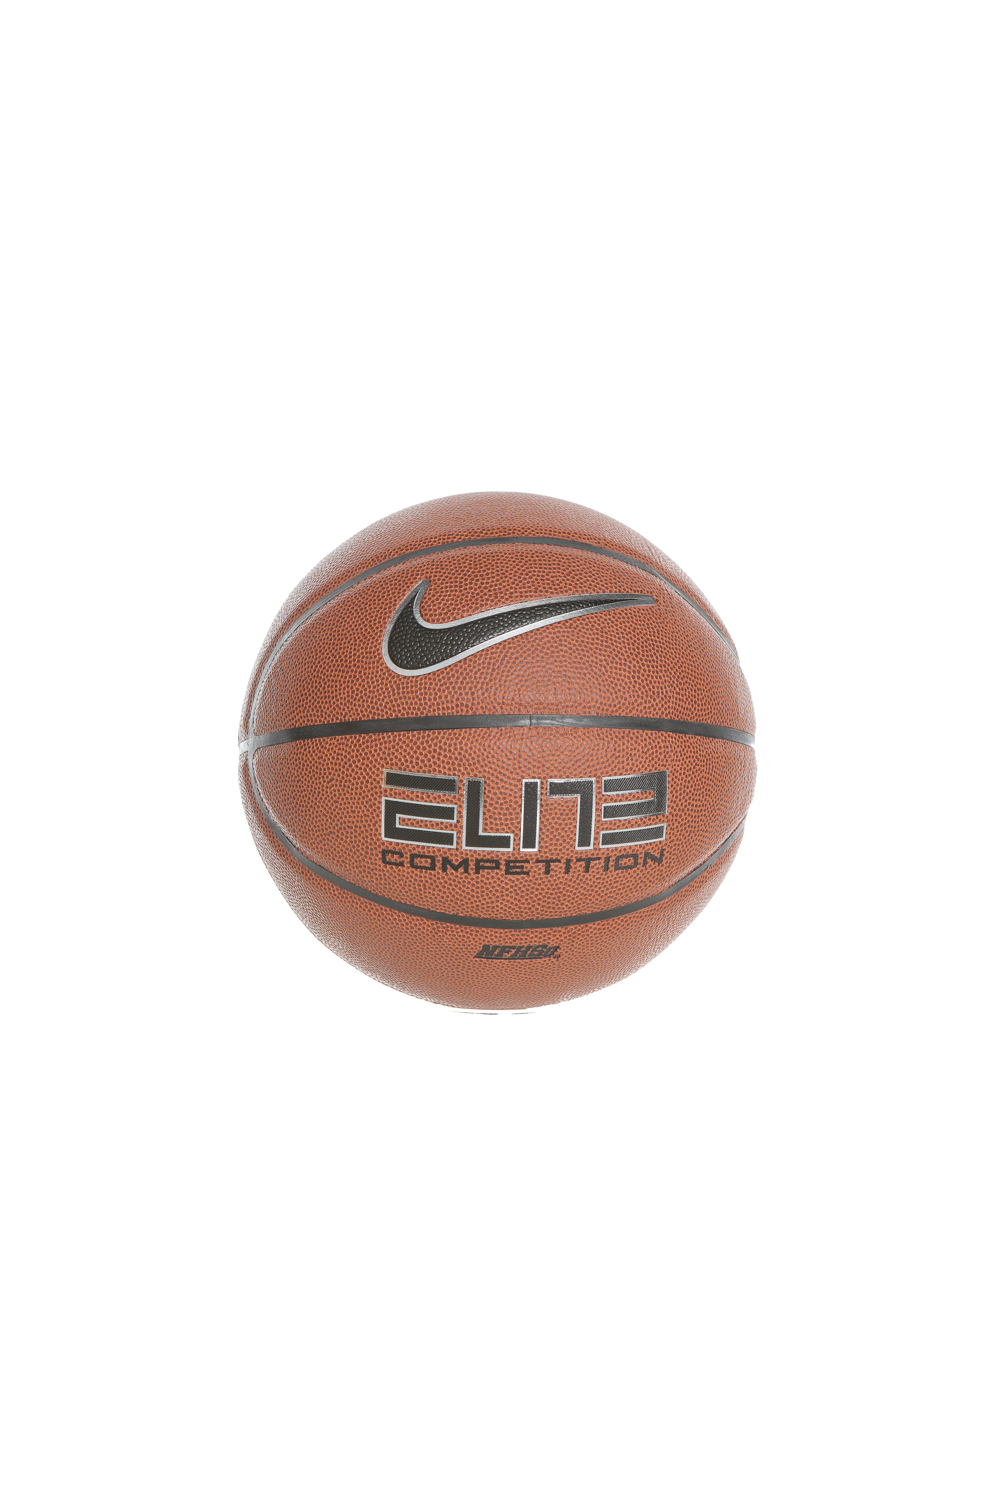 NIKE – Μπαλα basketball NIKE ELITE COMPETITION 2.0 πορτοκαλι